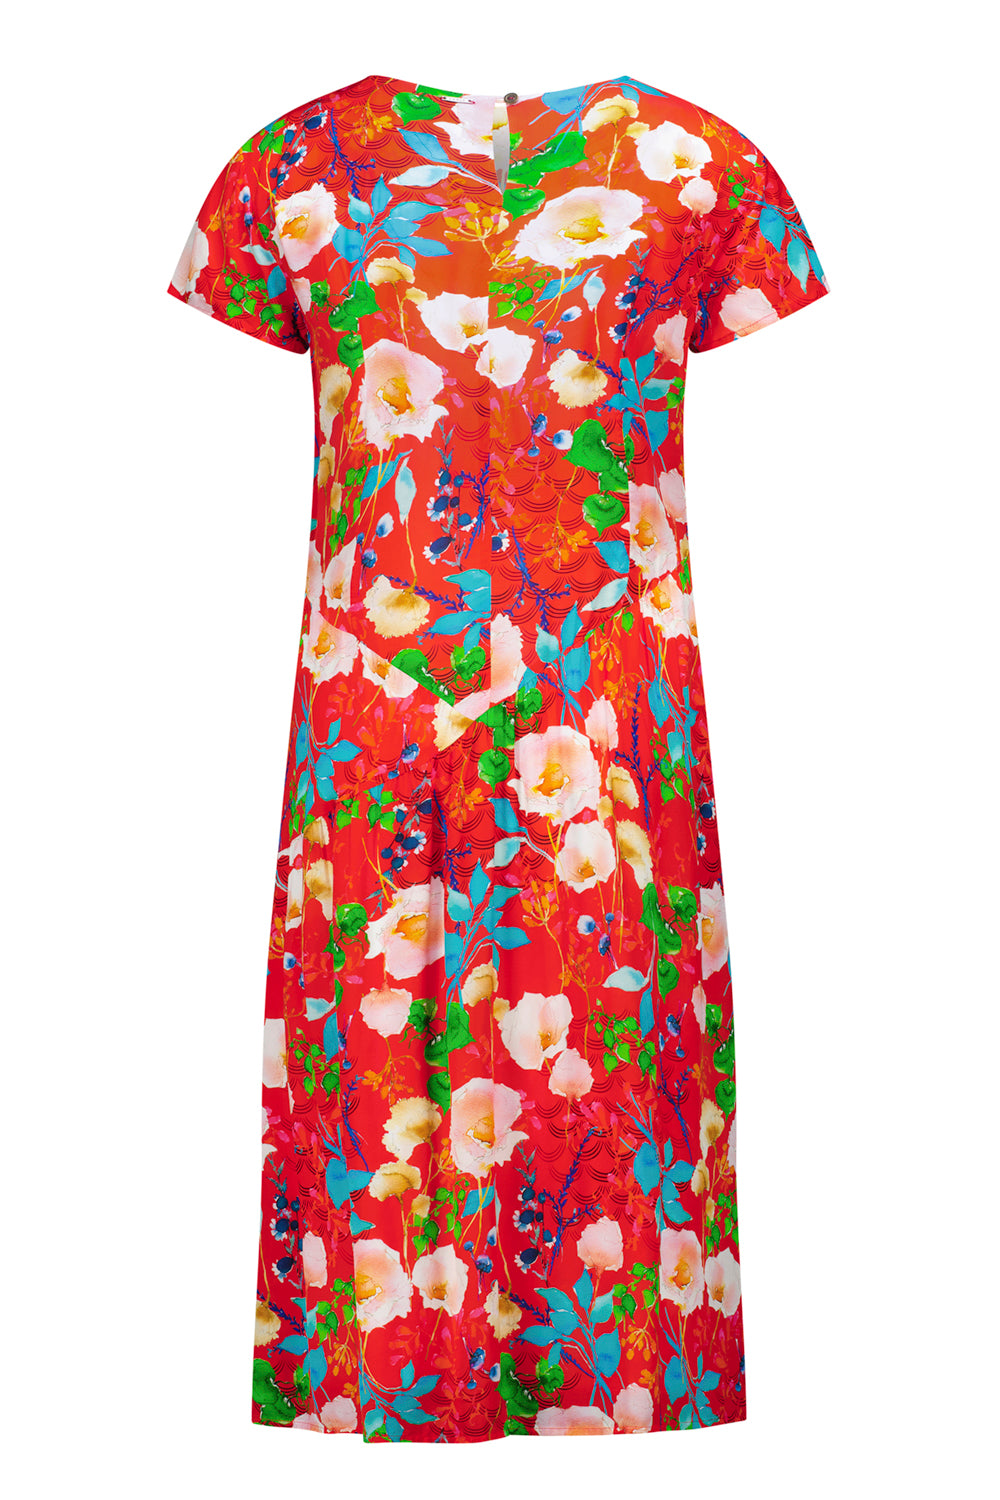 Sakura Dress - Red Floral Print - Dress VERGE